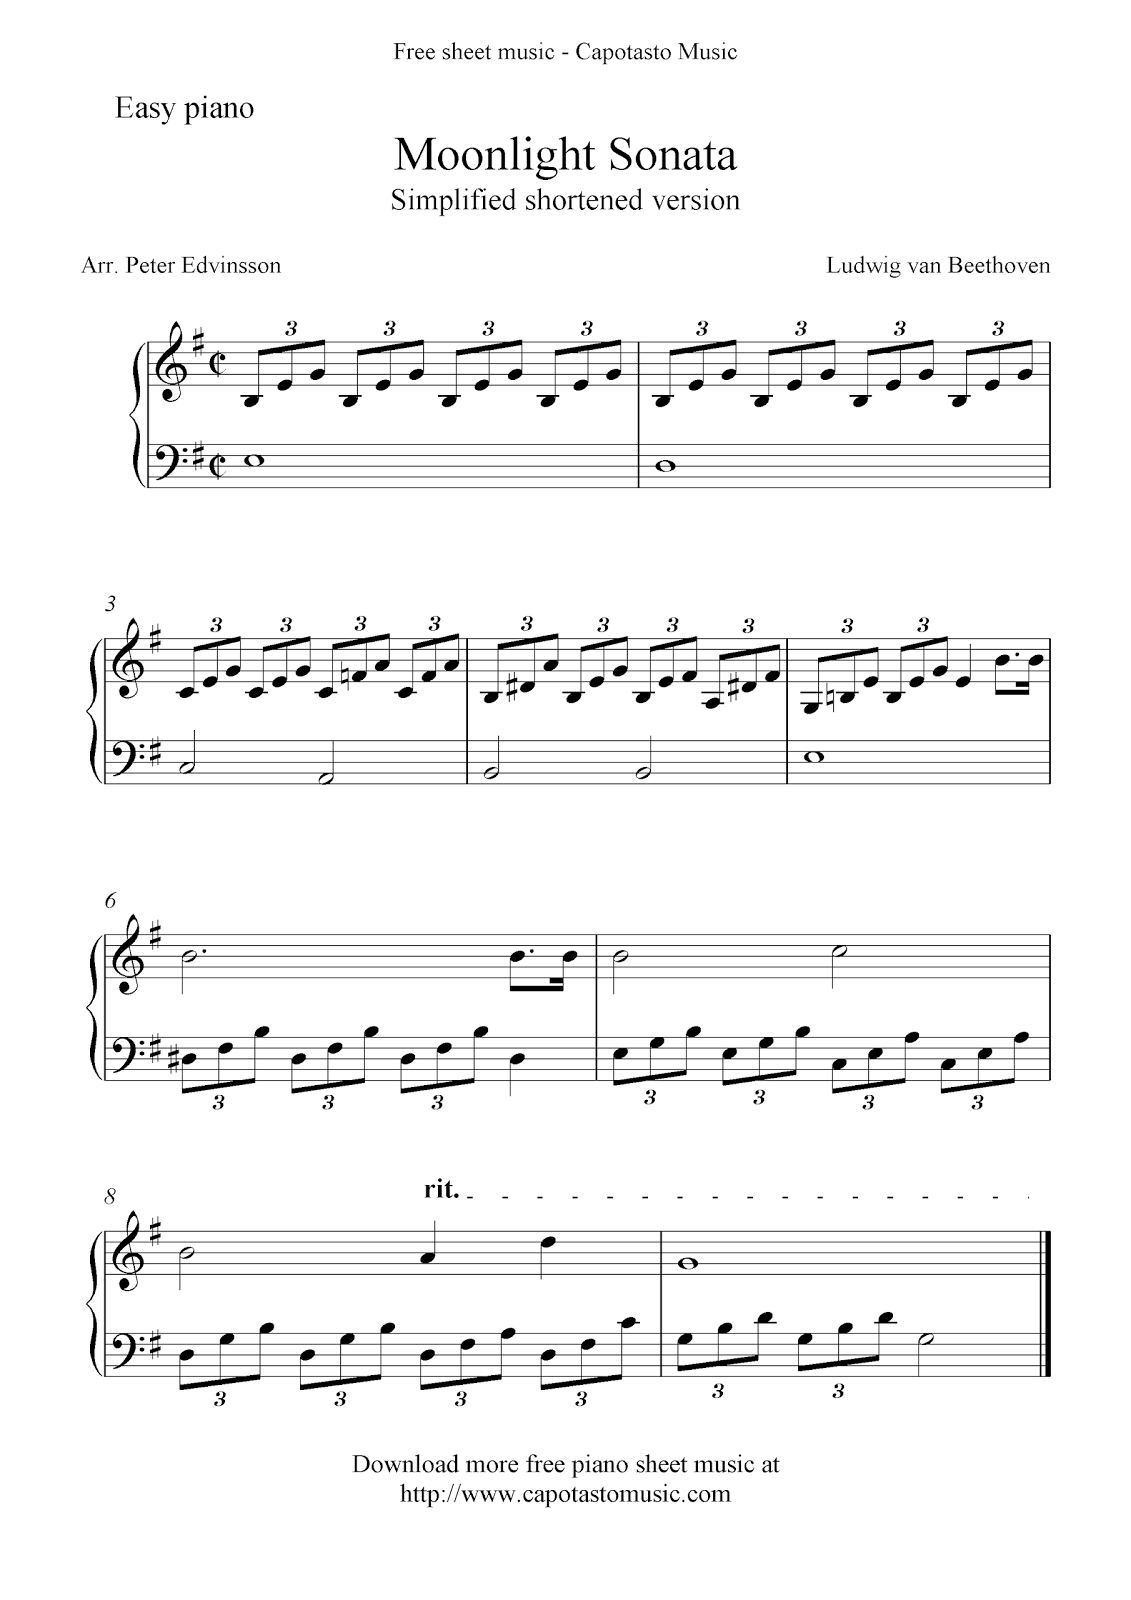 Free Sheet Music Scores: Free Easy Piano Sheet Music, Moonlight - Free Printable Classical Sheet Music For Piano